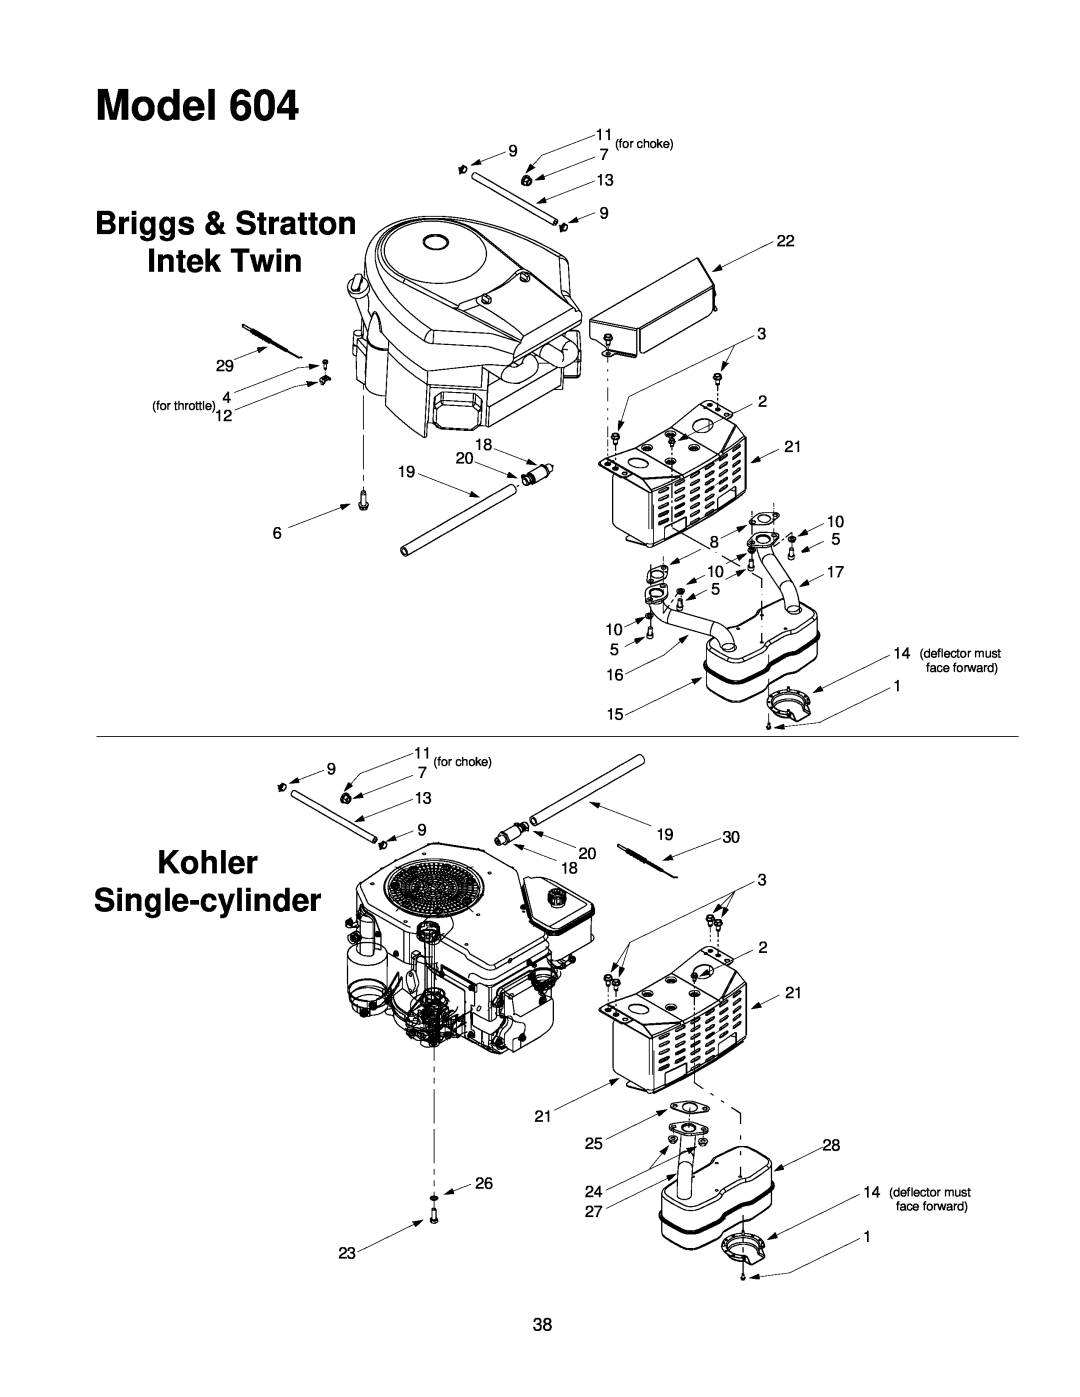 Yard-Man 247.27432 manual Briggs & Stratton, Kohler, Single-cylinder, Model, Intek Twin, for choke 